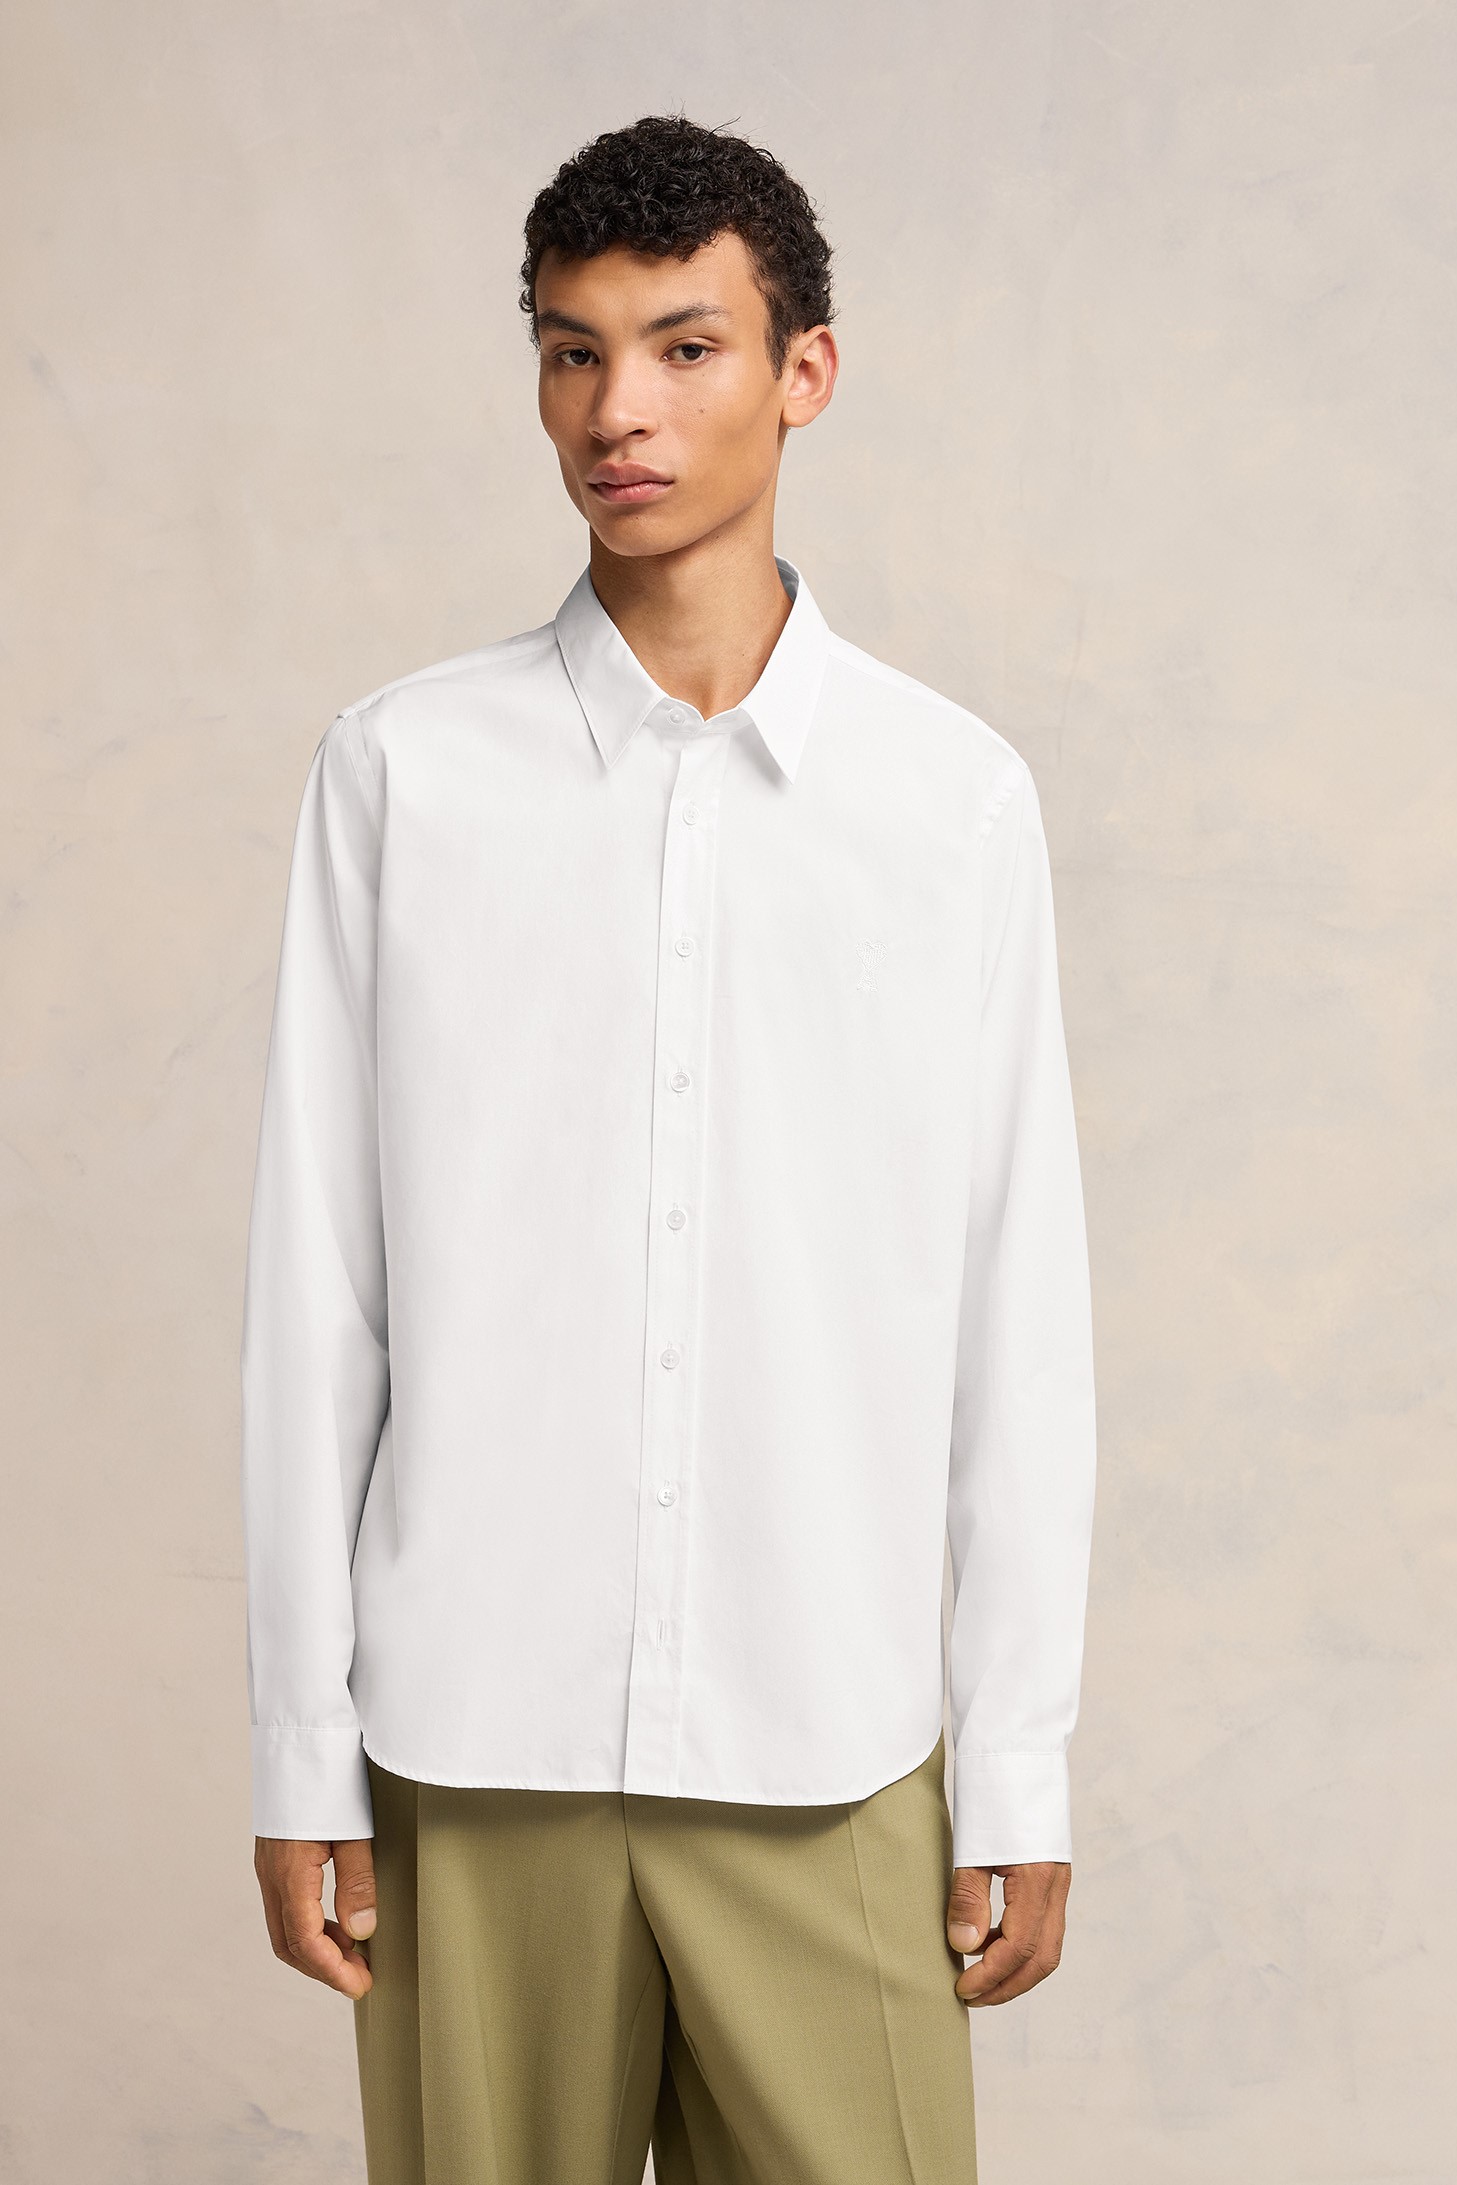 AMI PARIS de Coeur Classic Shirt in White S